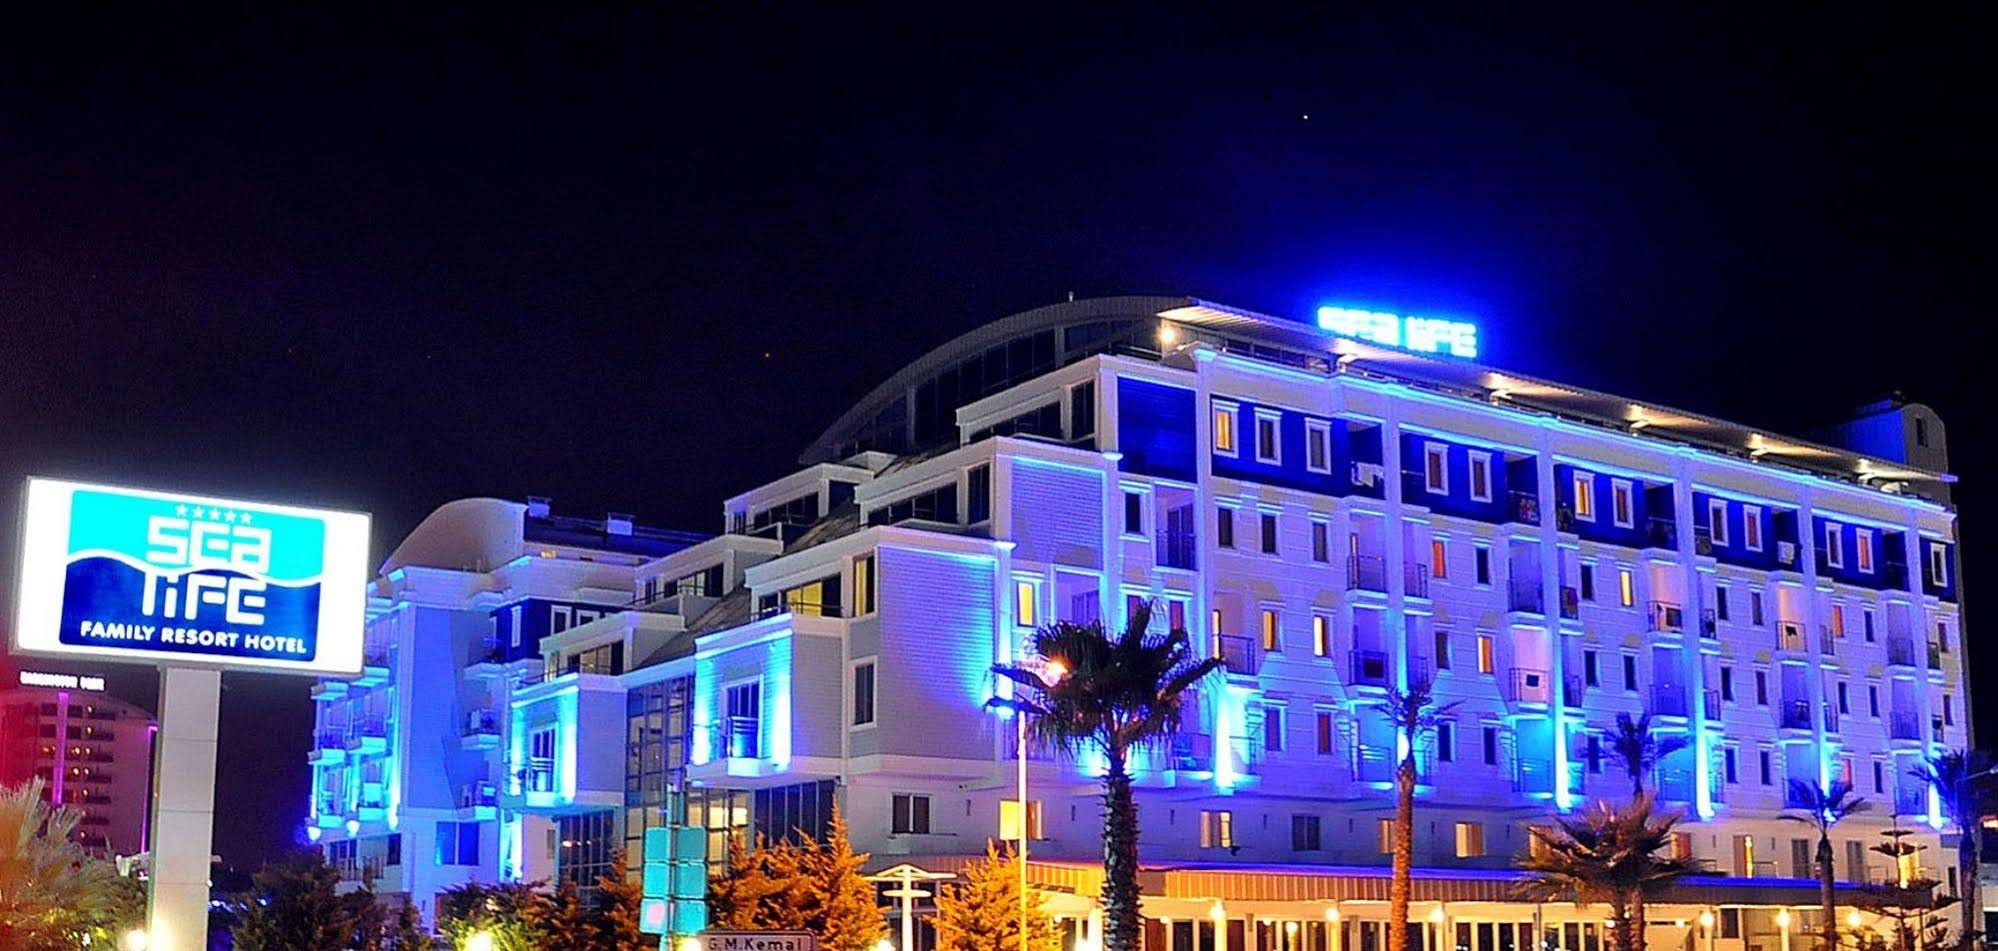 Sealife Family Resort Hotel